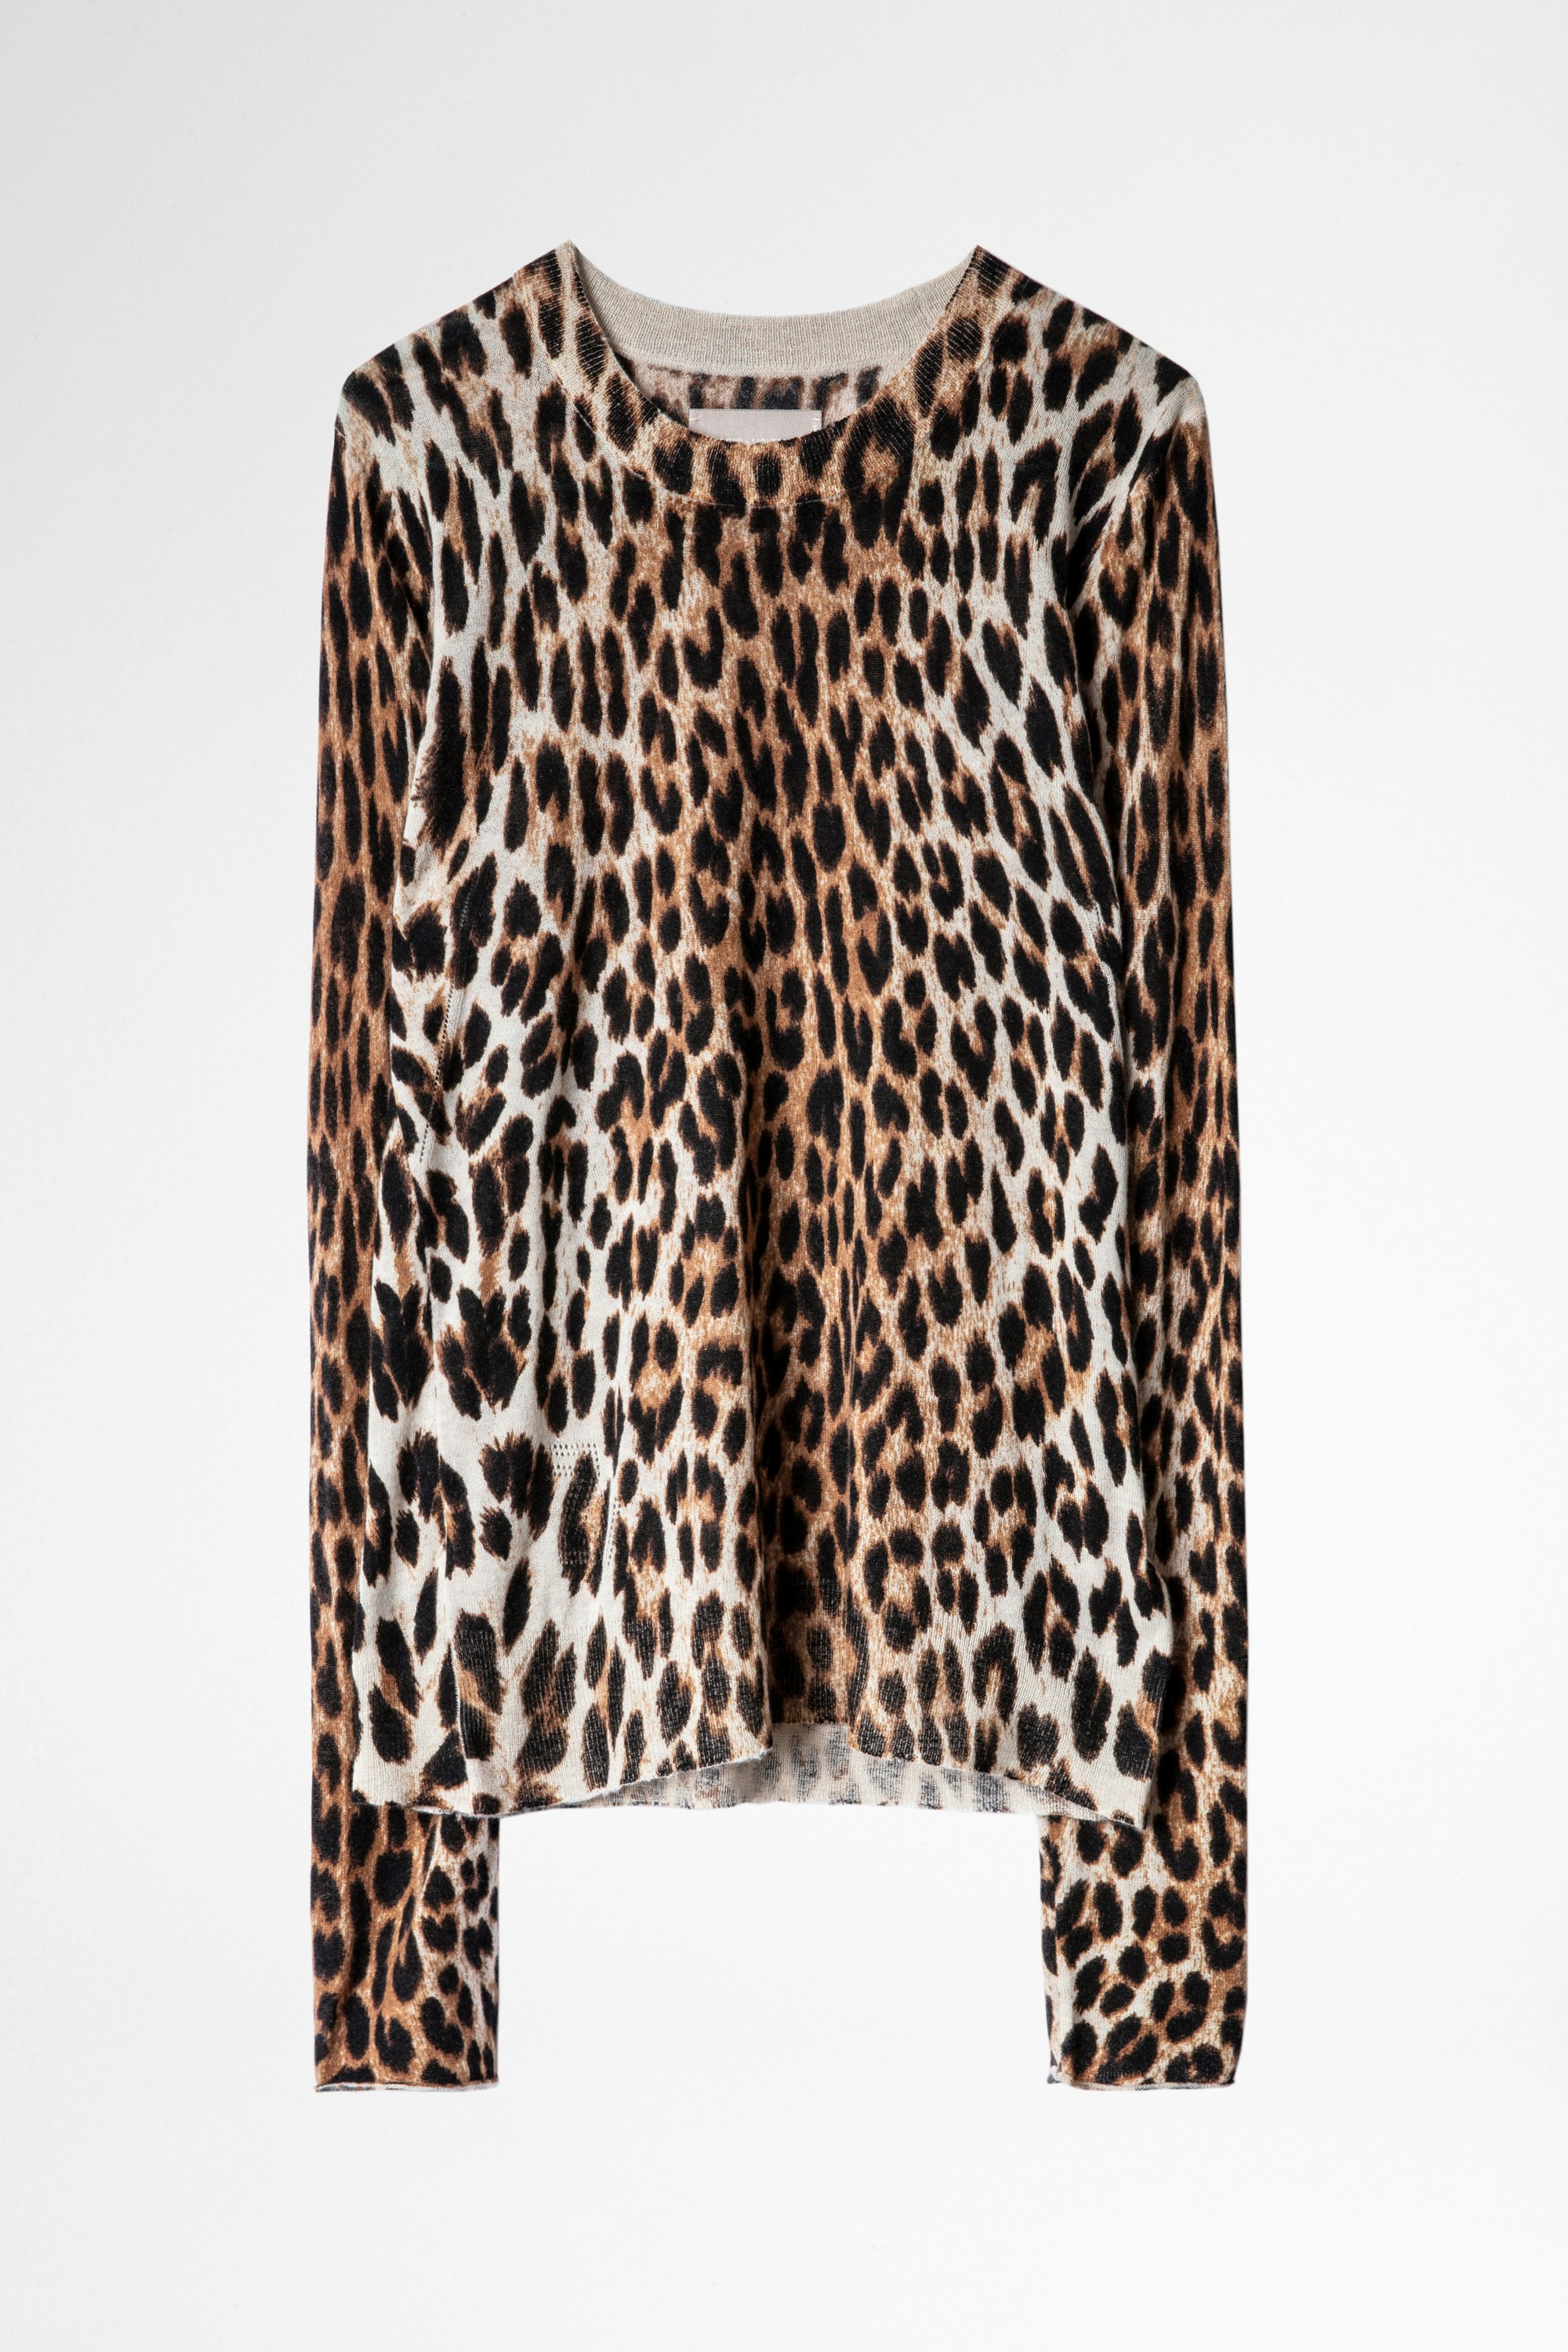 Miss Cashmere Sweater Women’s leopard print sweater